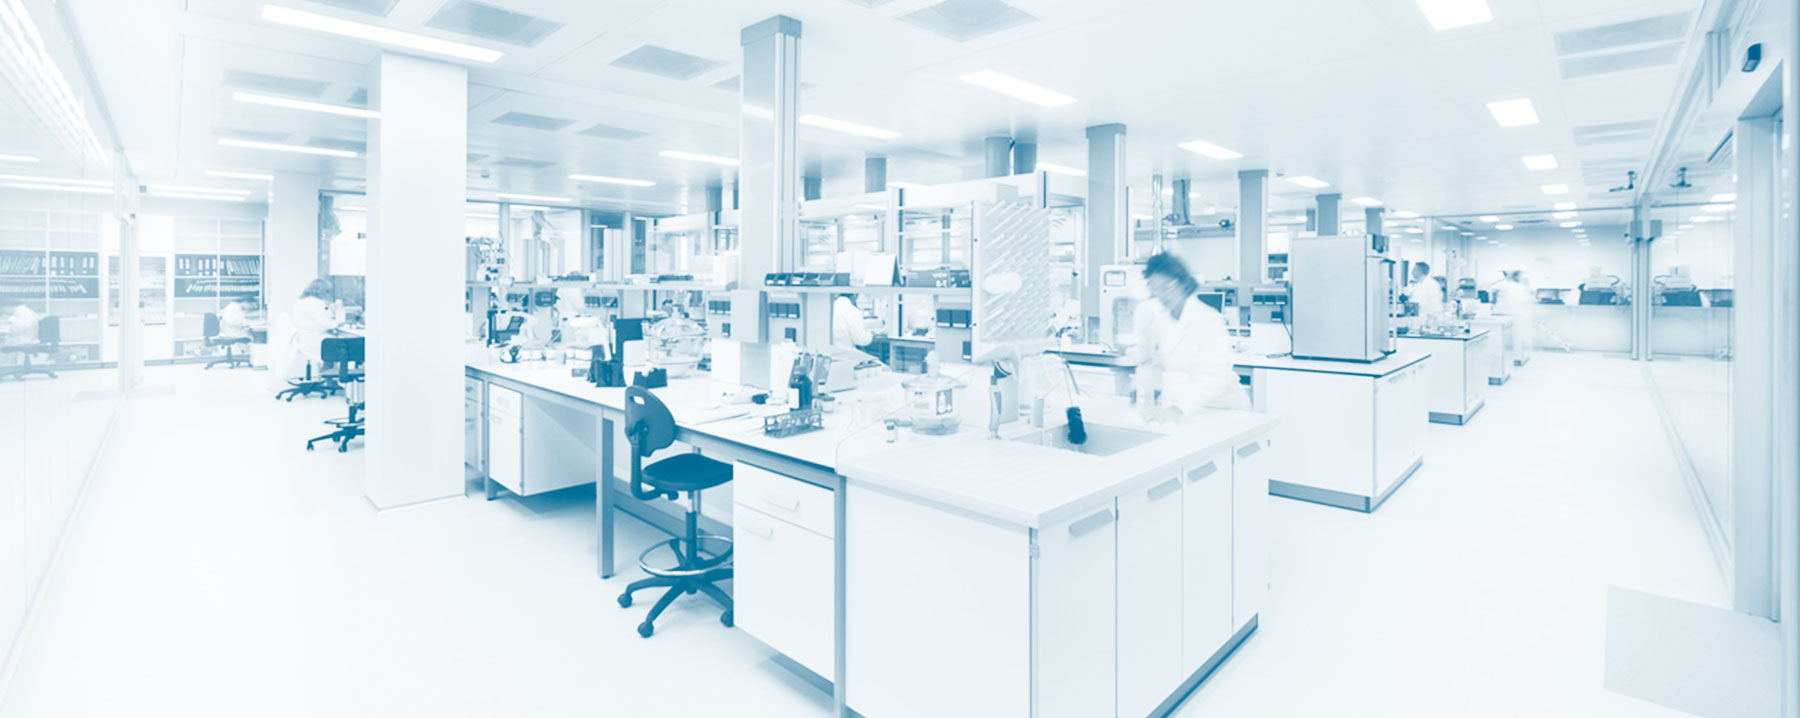 Scientists at work in a laboratory designed by Burdinola